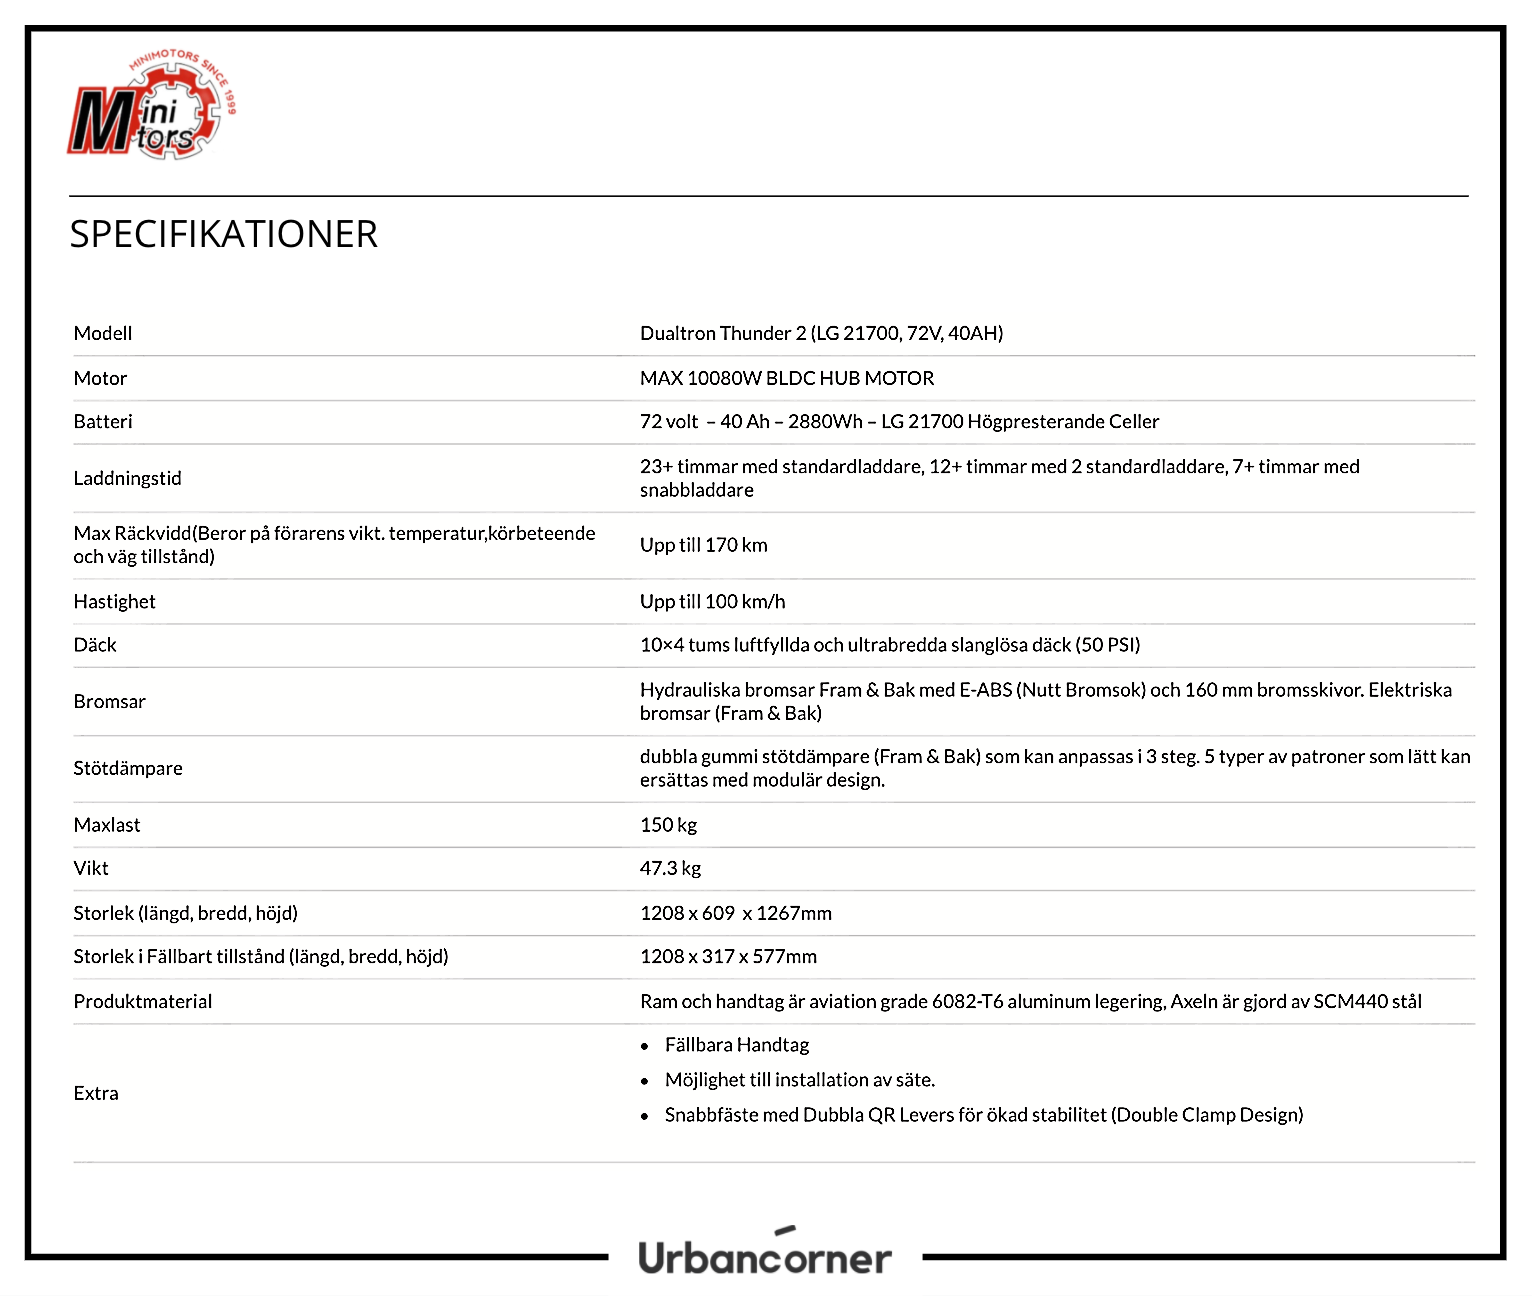 Urbancorner - Specifikationer Dualtron Thunder 2